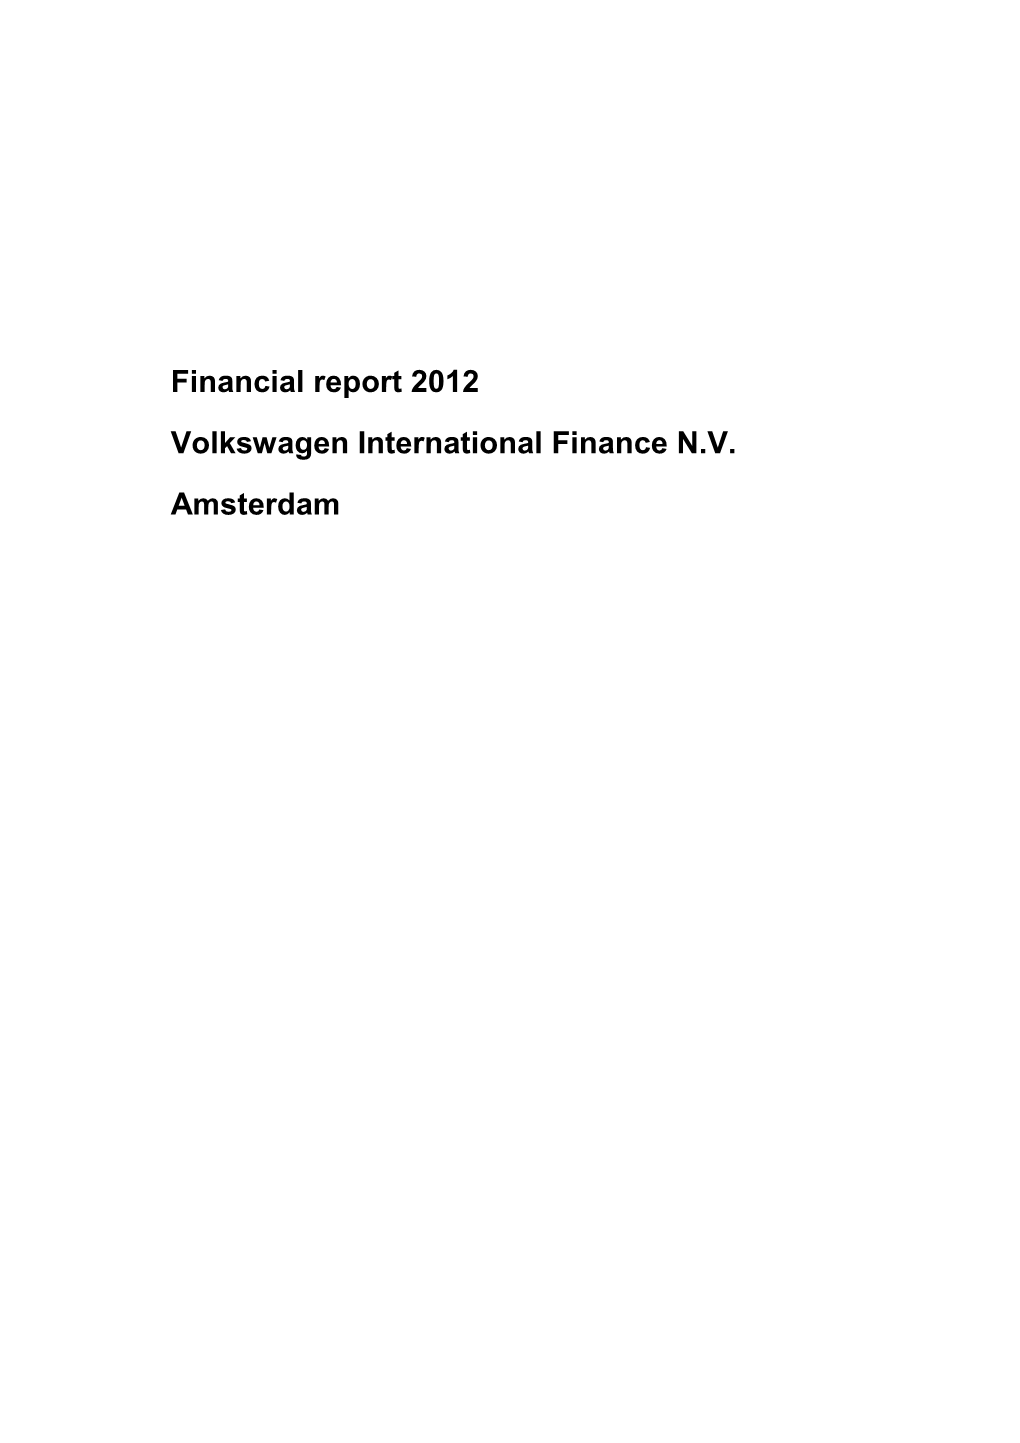 Financial Report 2012 Volkswagen International Finance N.V. Amsterdam Contents